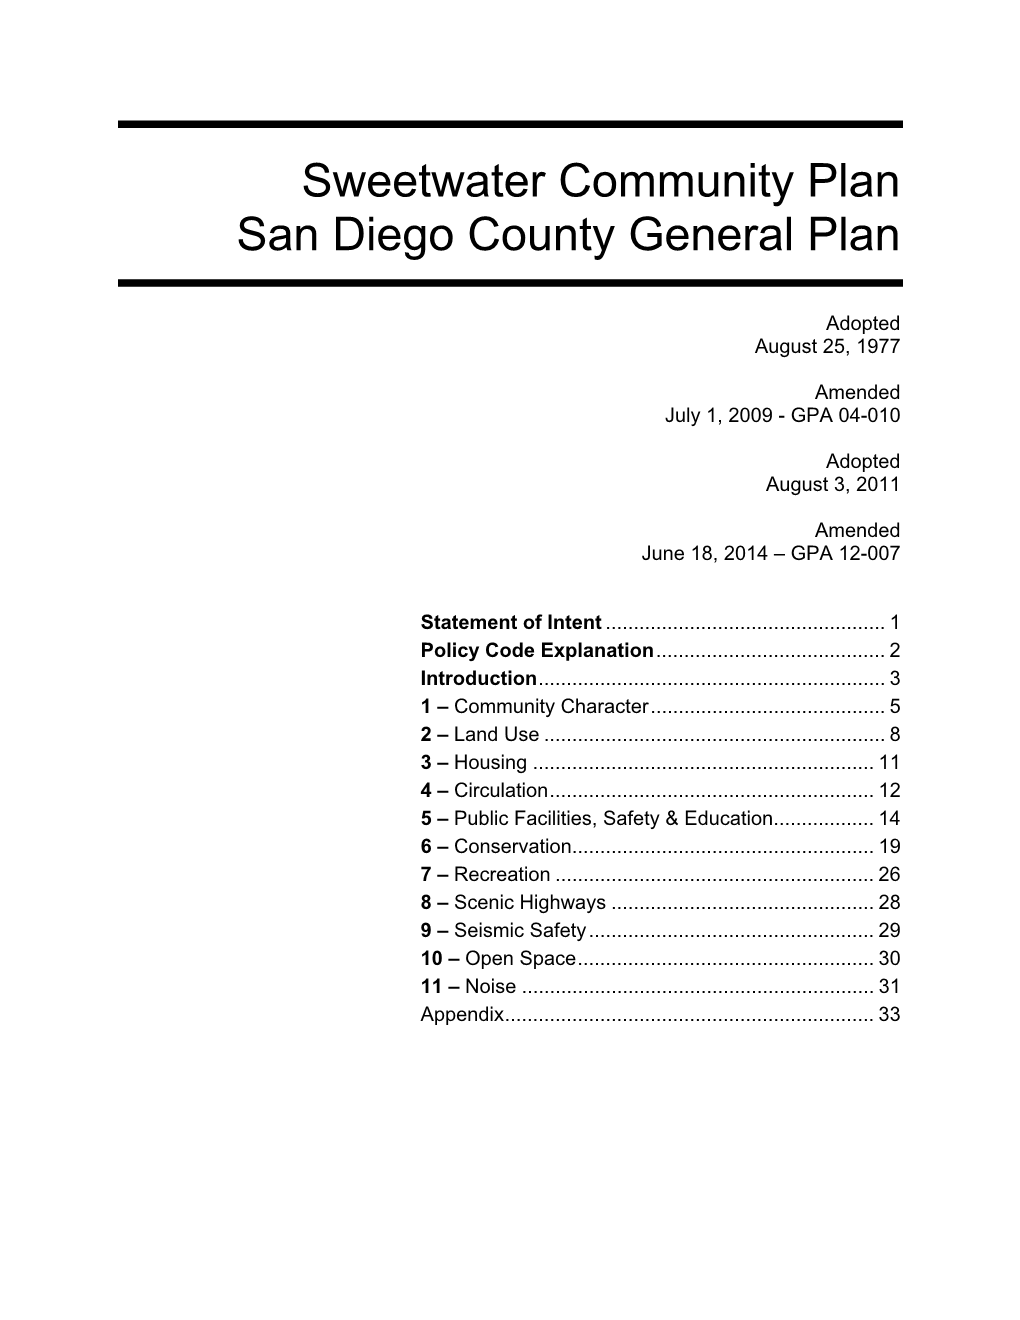 Sweetwater Community Plan San Diego County General Plan